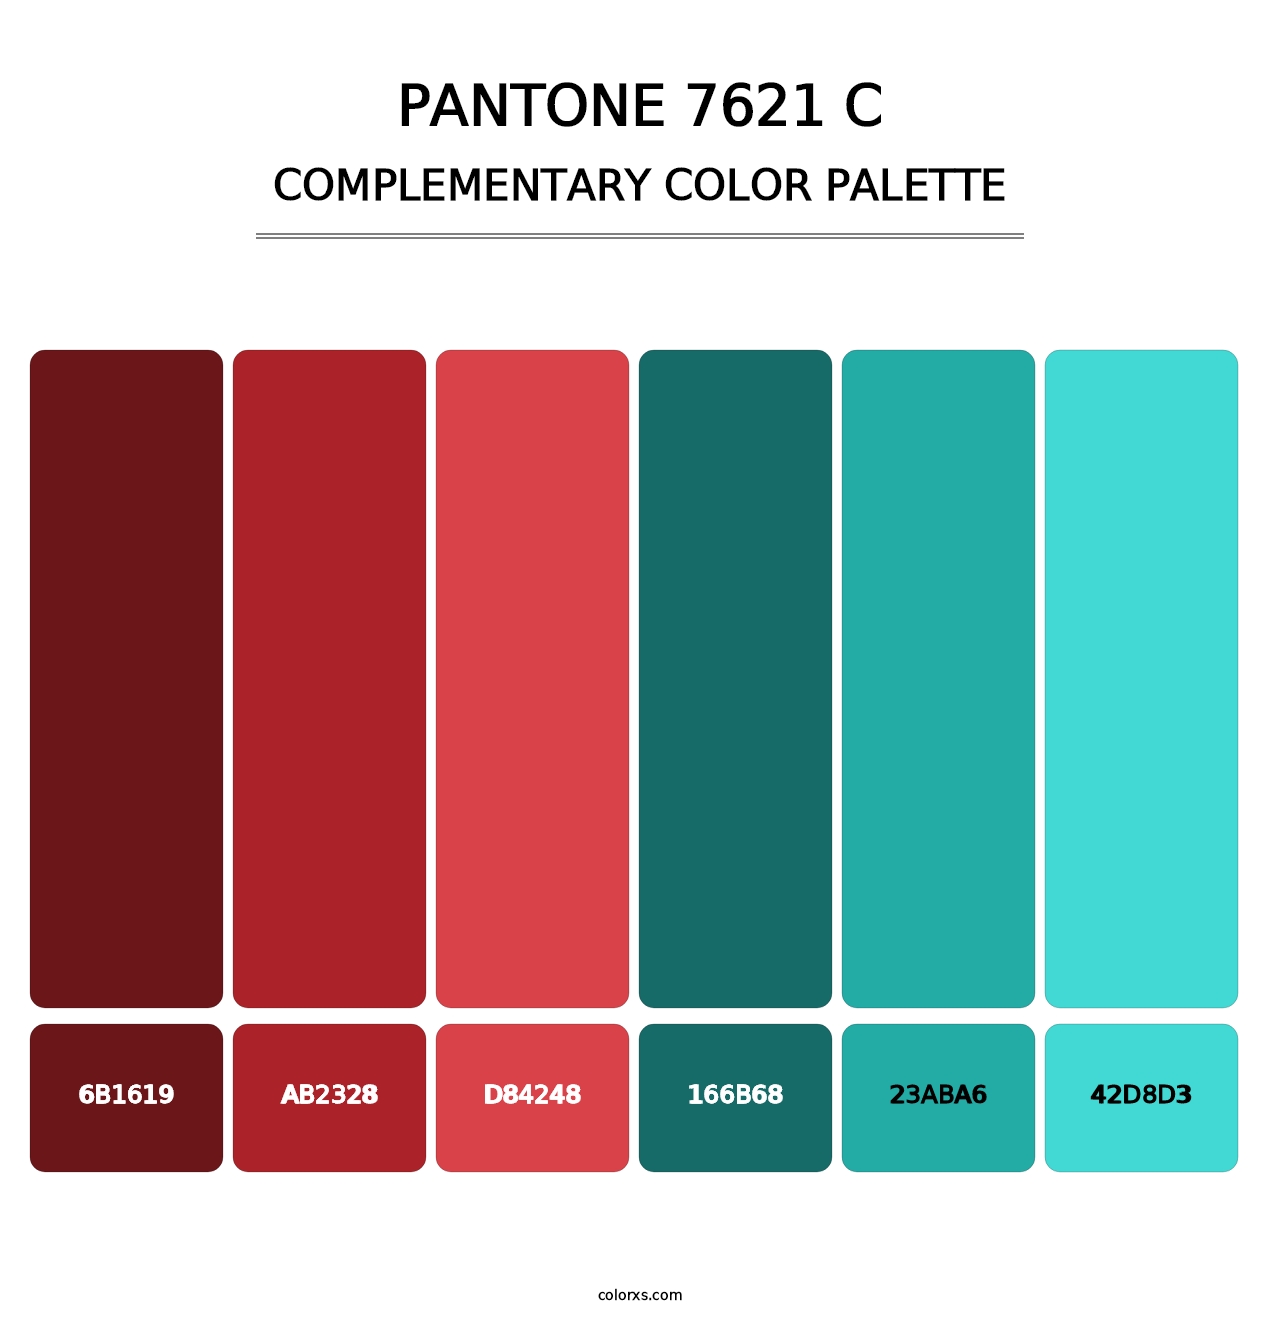 PANTONE 7621 C - Complementary Color Palette